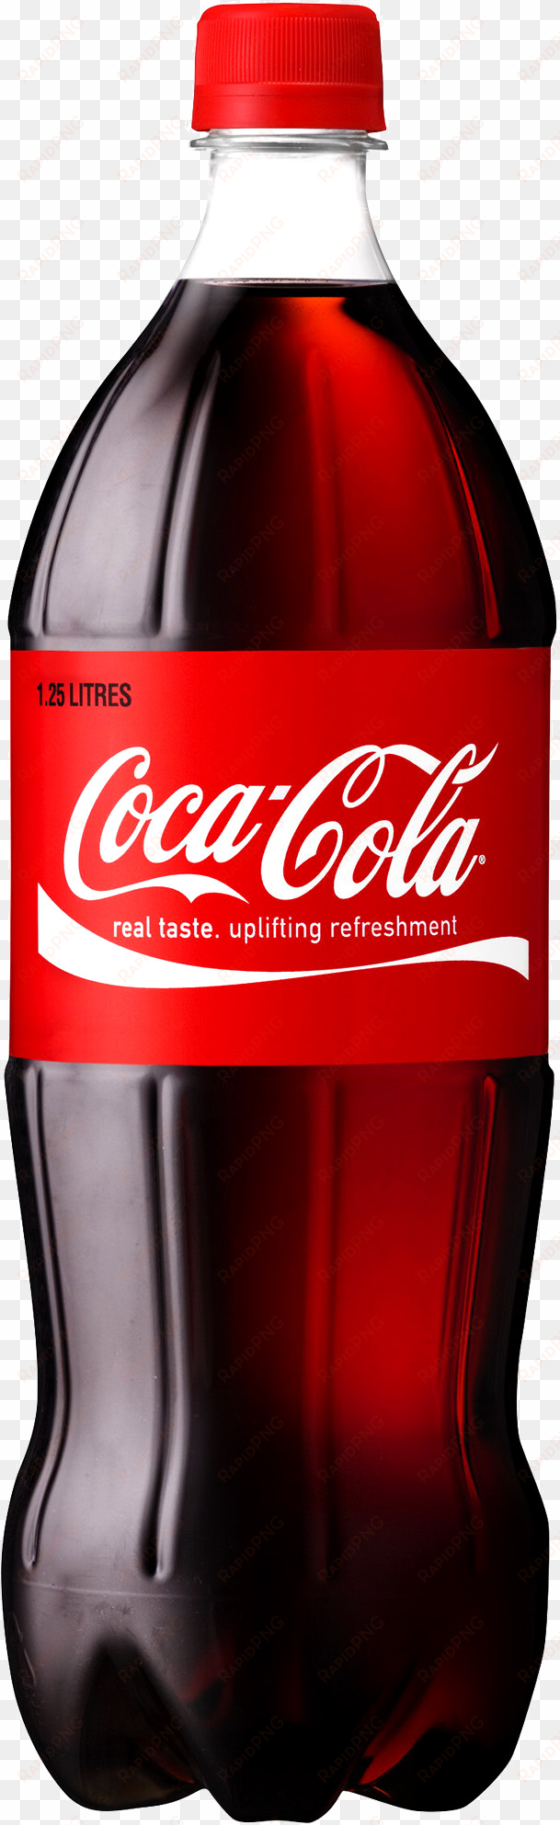 coca cola bottle png image - coca cola